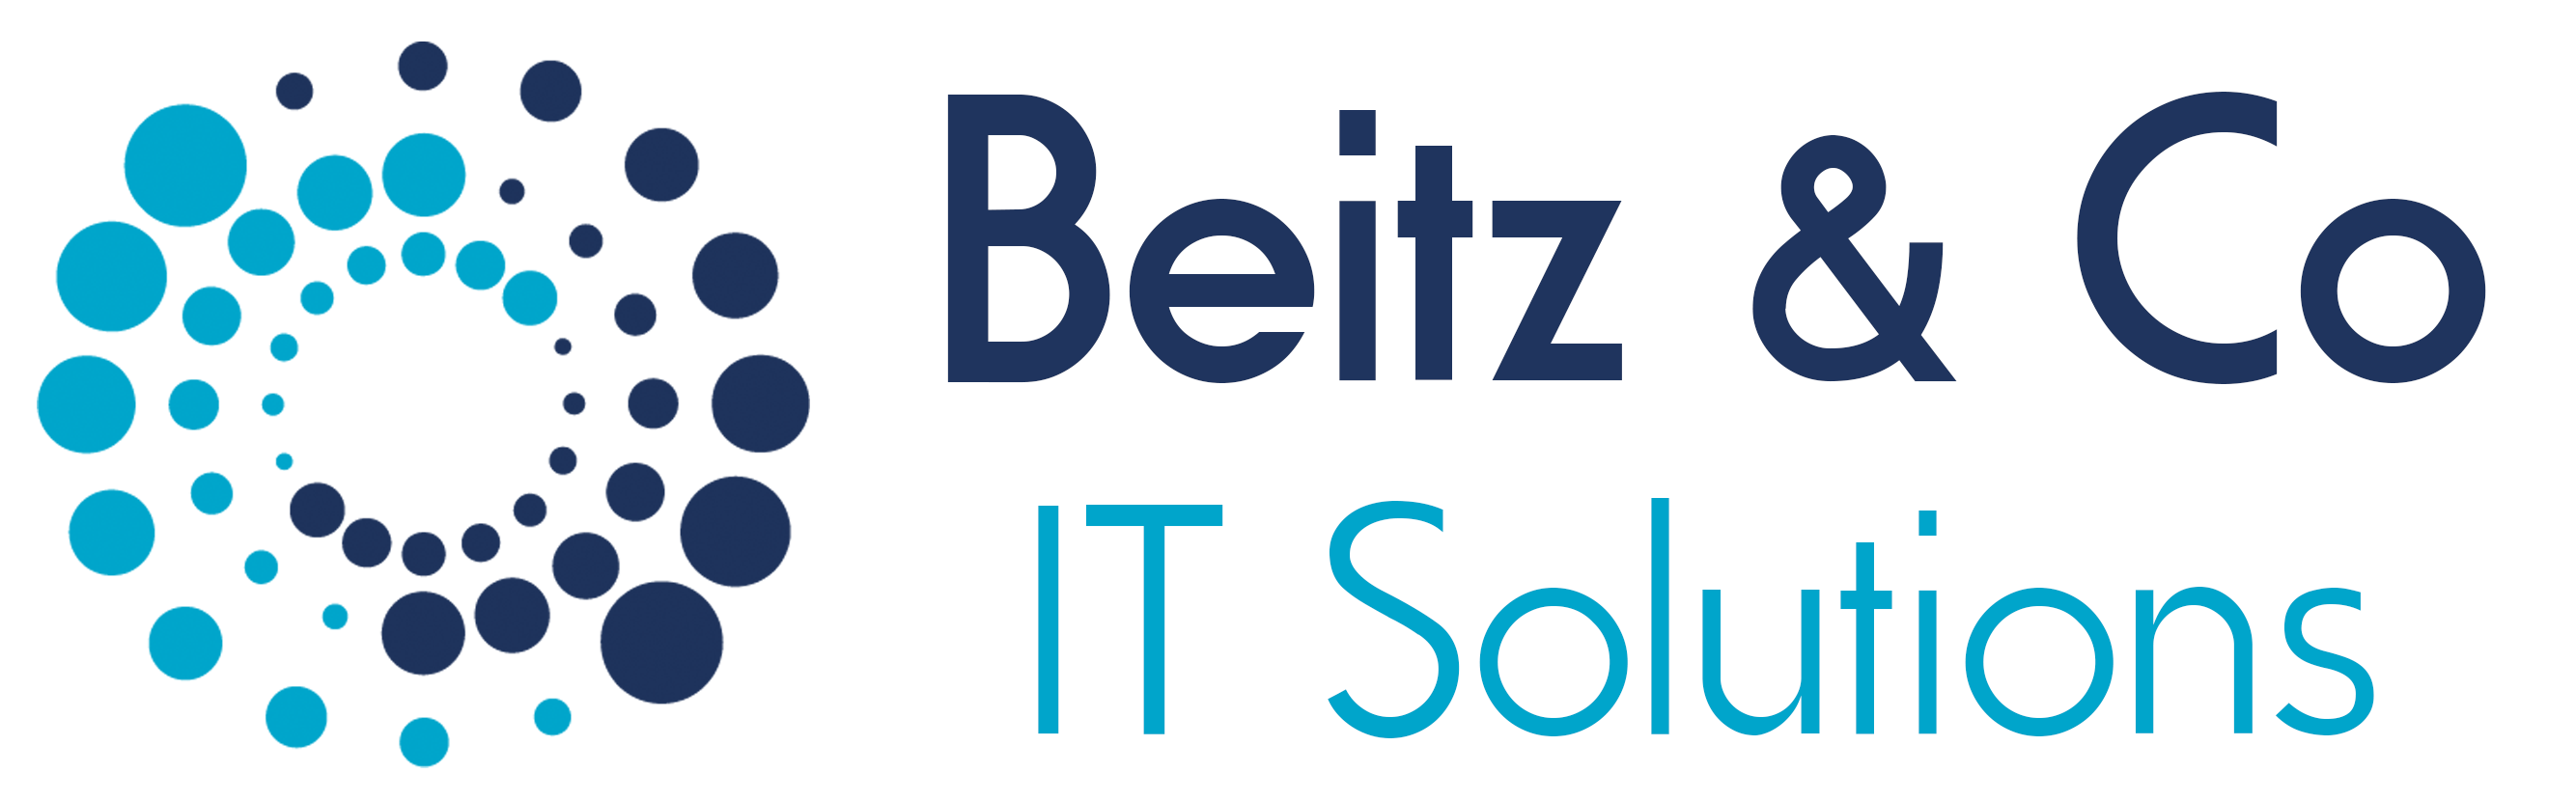 Beitz & Co Logo